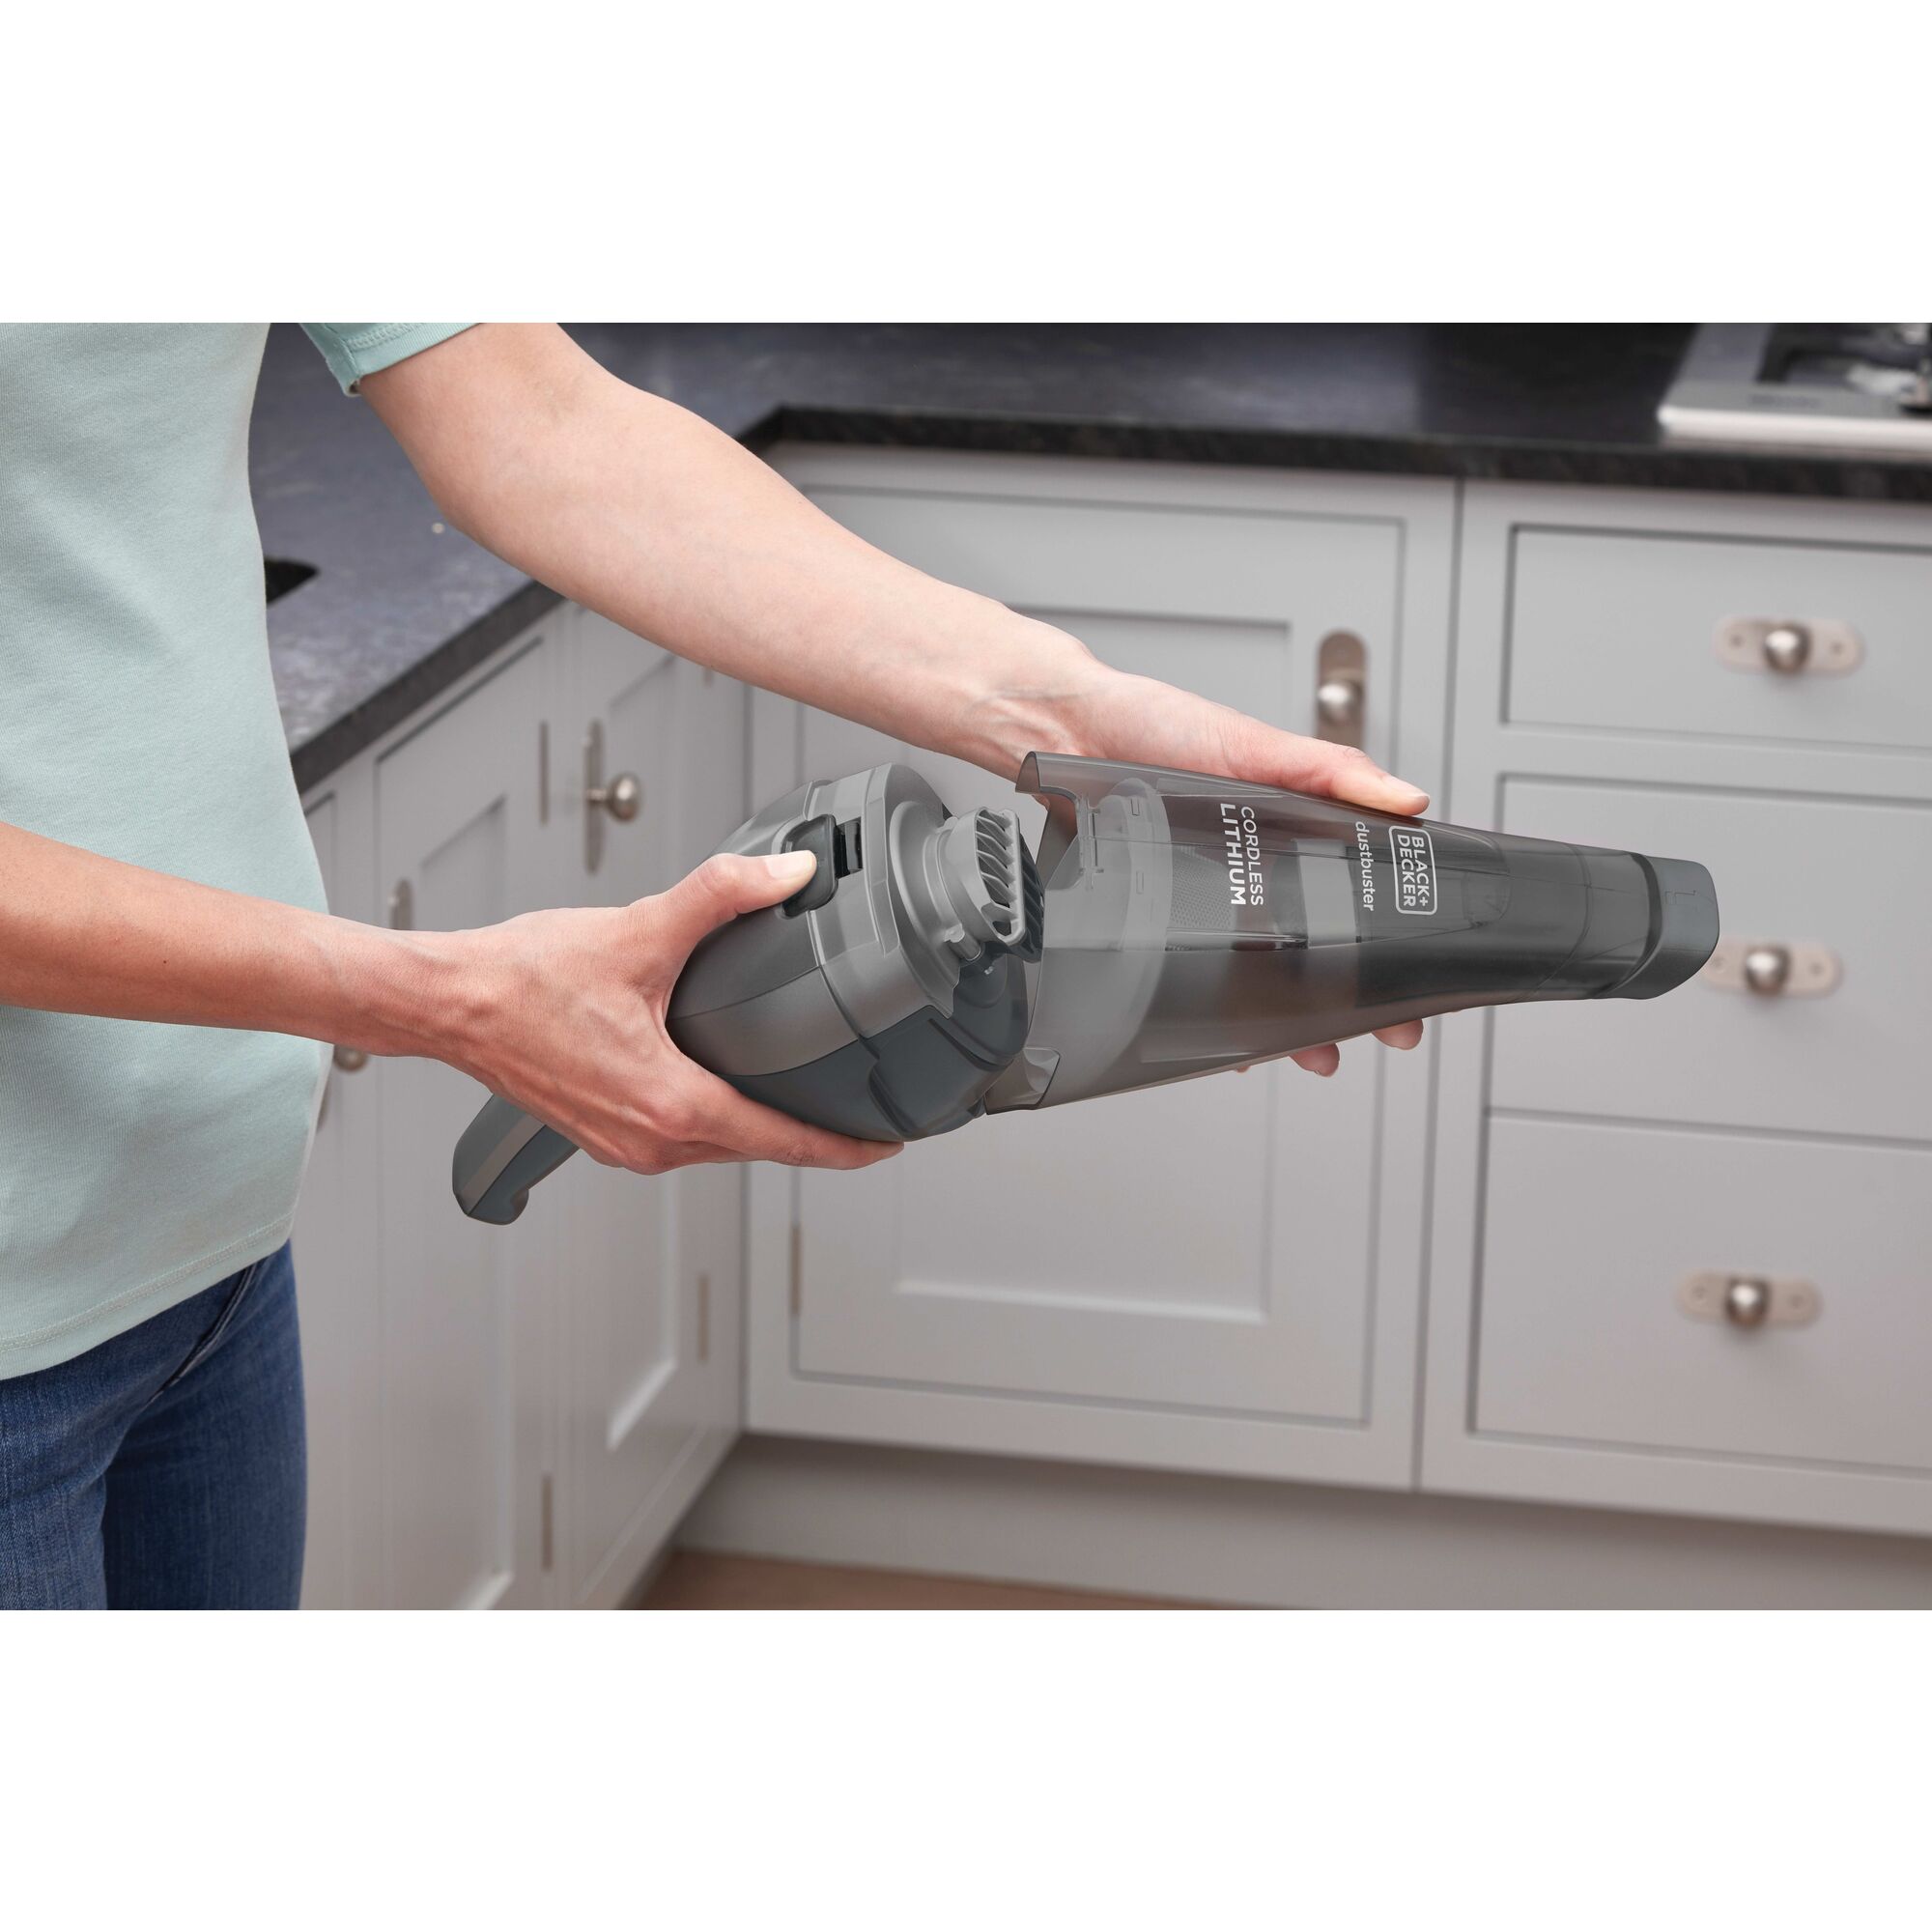 Person emptying dust bowl of BLACK+DECKER dustbuster handheld vacuum